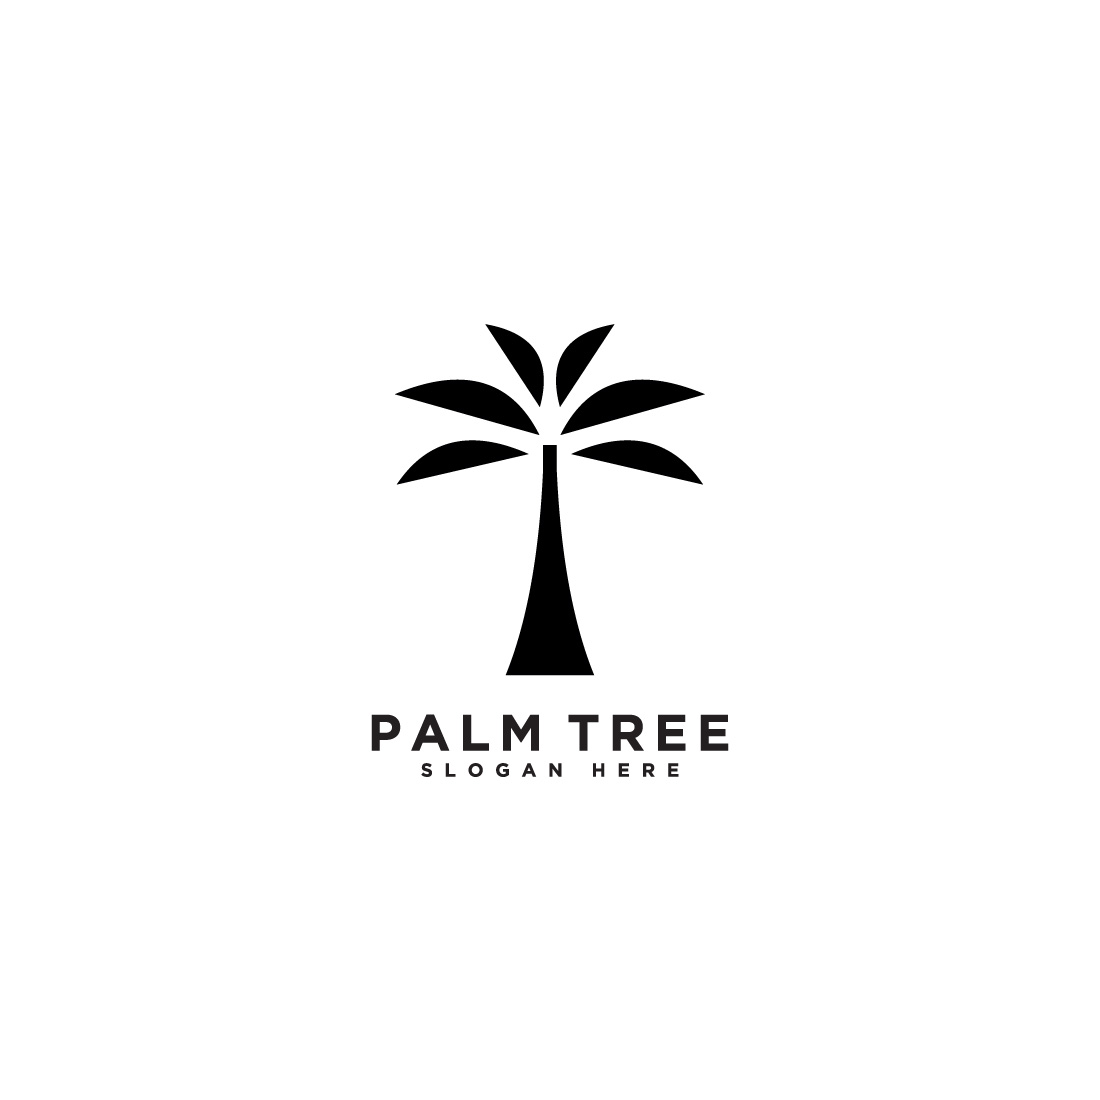 palm tree logo preview image.